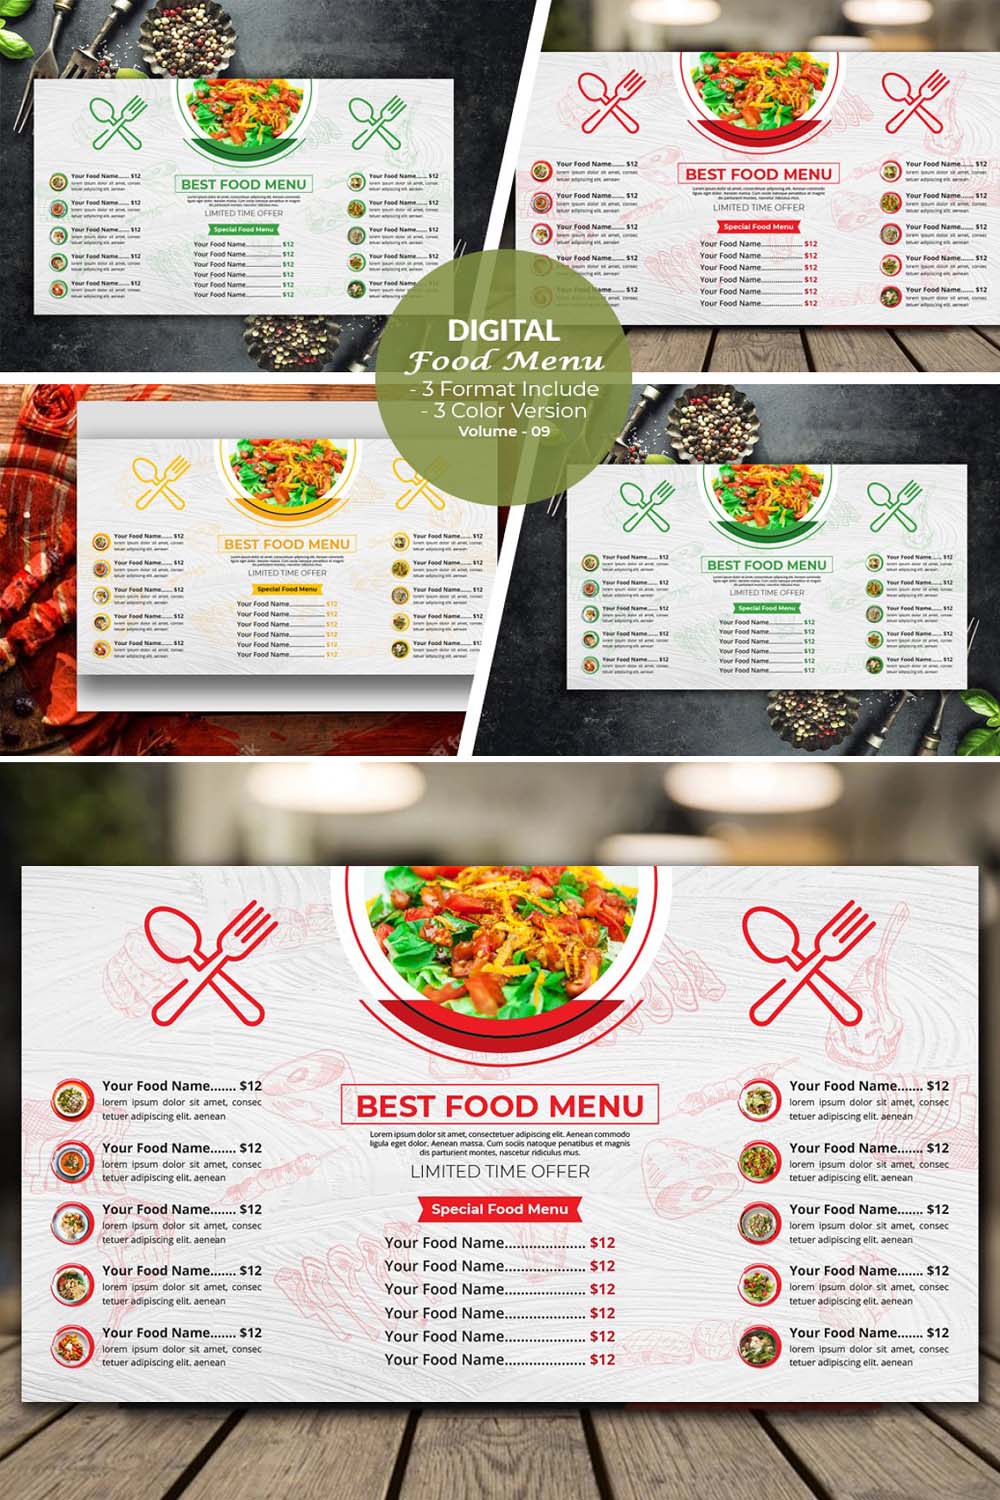 Digital Menu For Restaurants pinterest preview image.